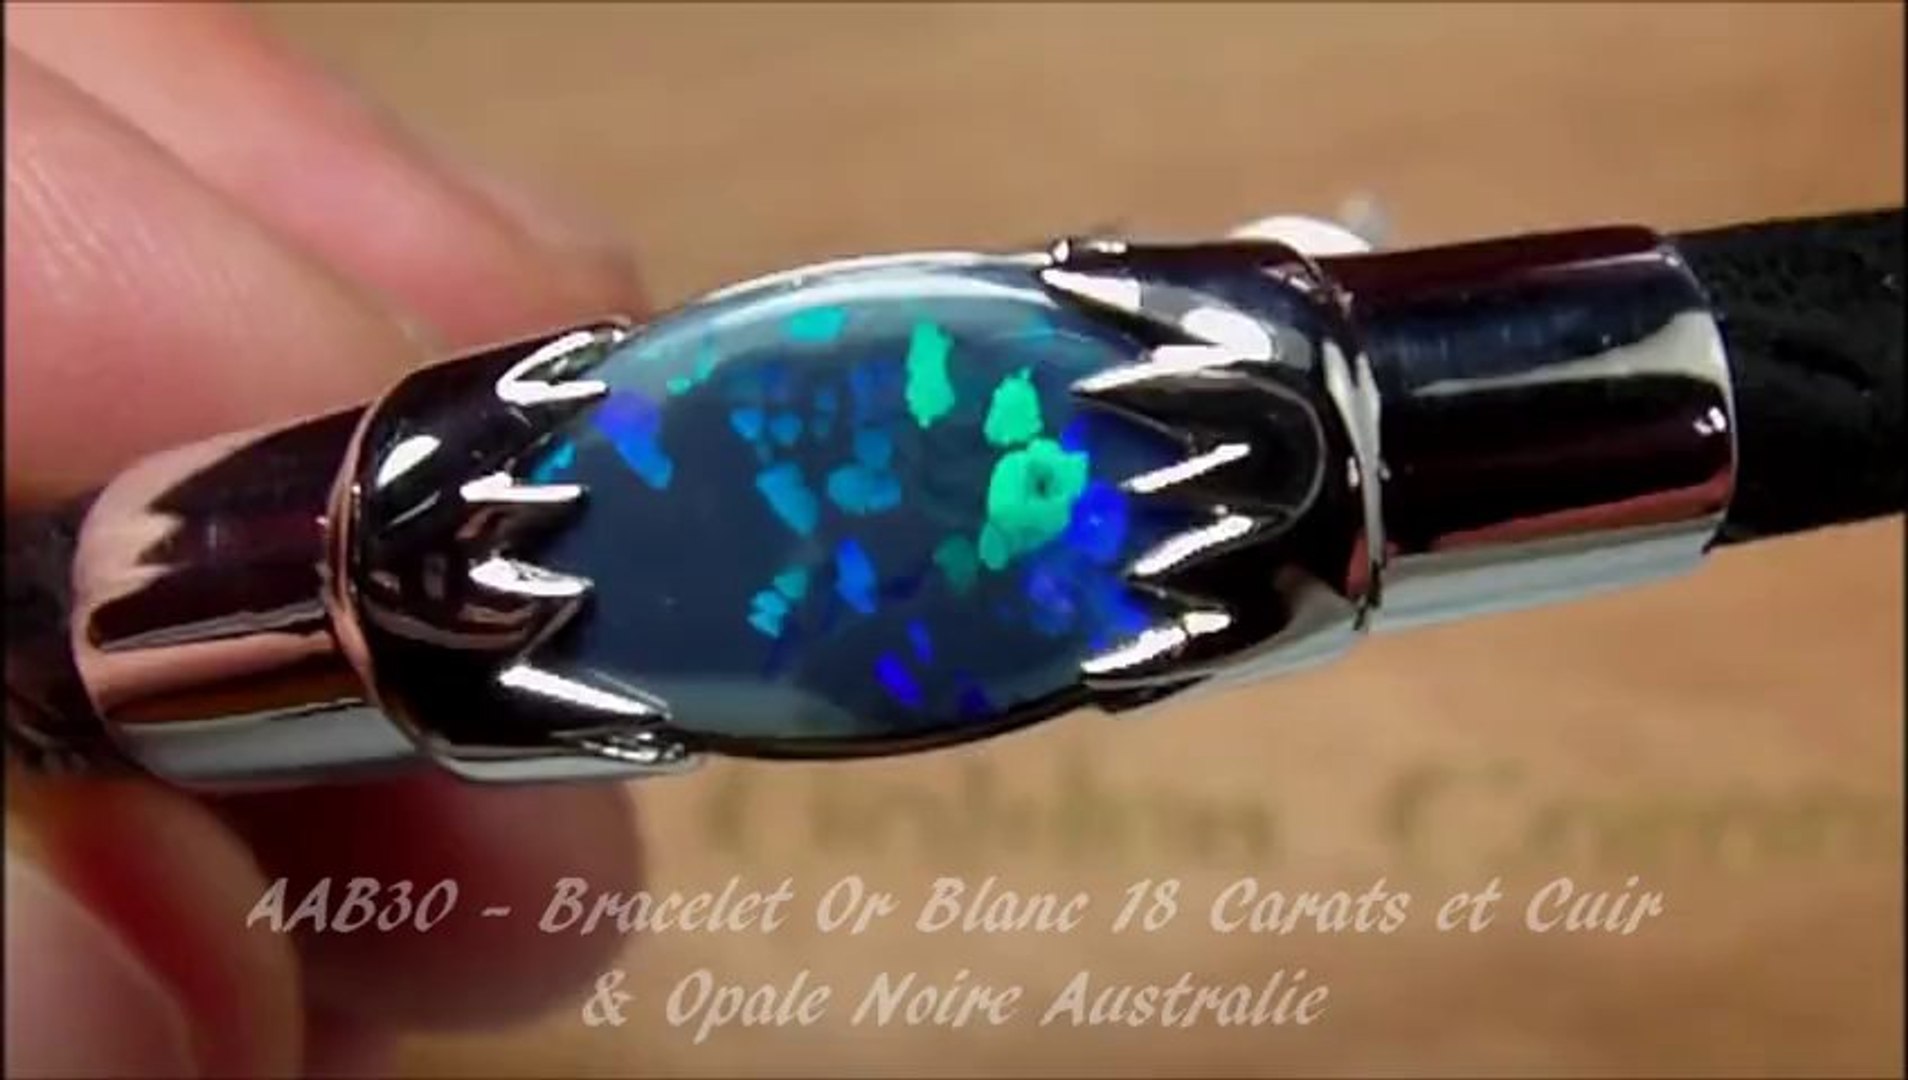 AAB30 - BIJOU OPAL ORION - Bracelet Homme Or Blanc 18 carats, Cuir Fleurus  & Opale Noire Australie Shamballa - Vidéo Dailymotion